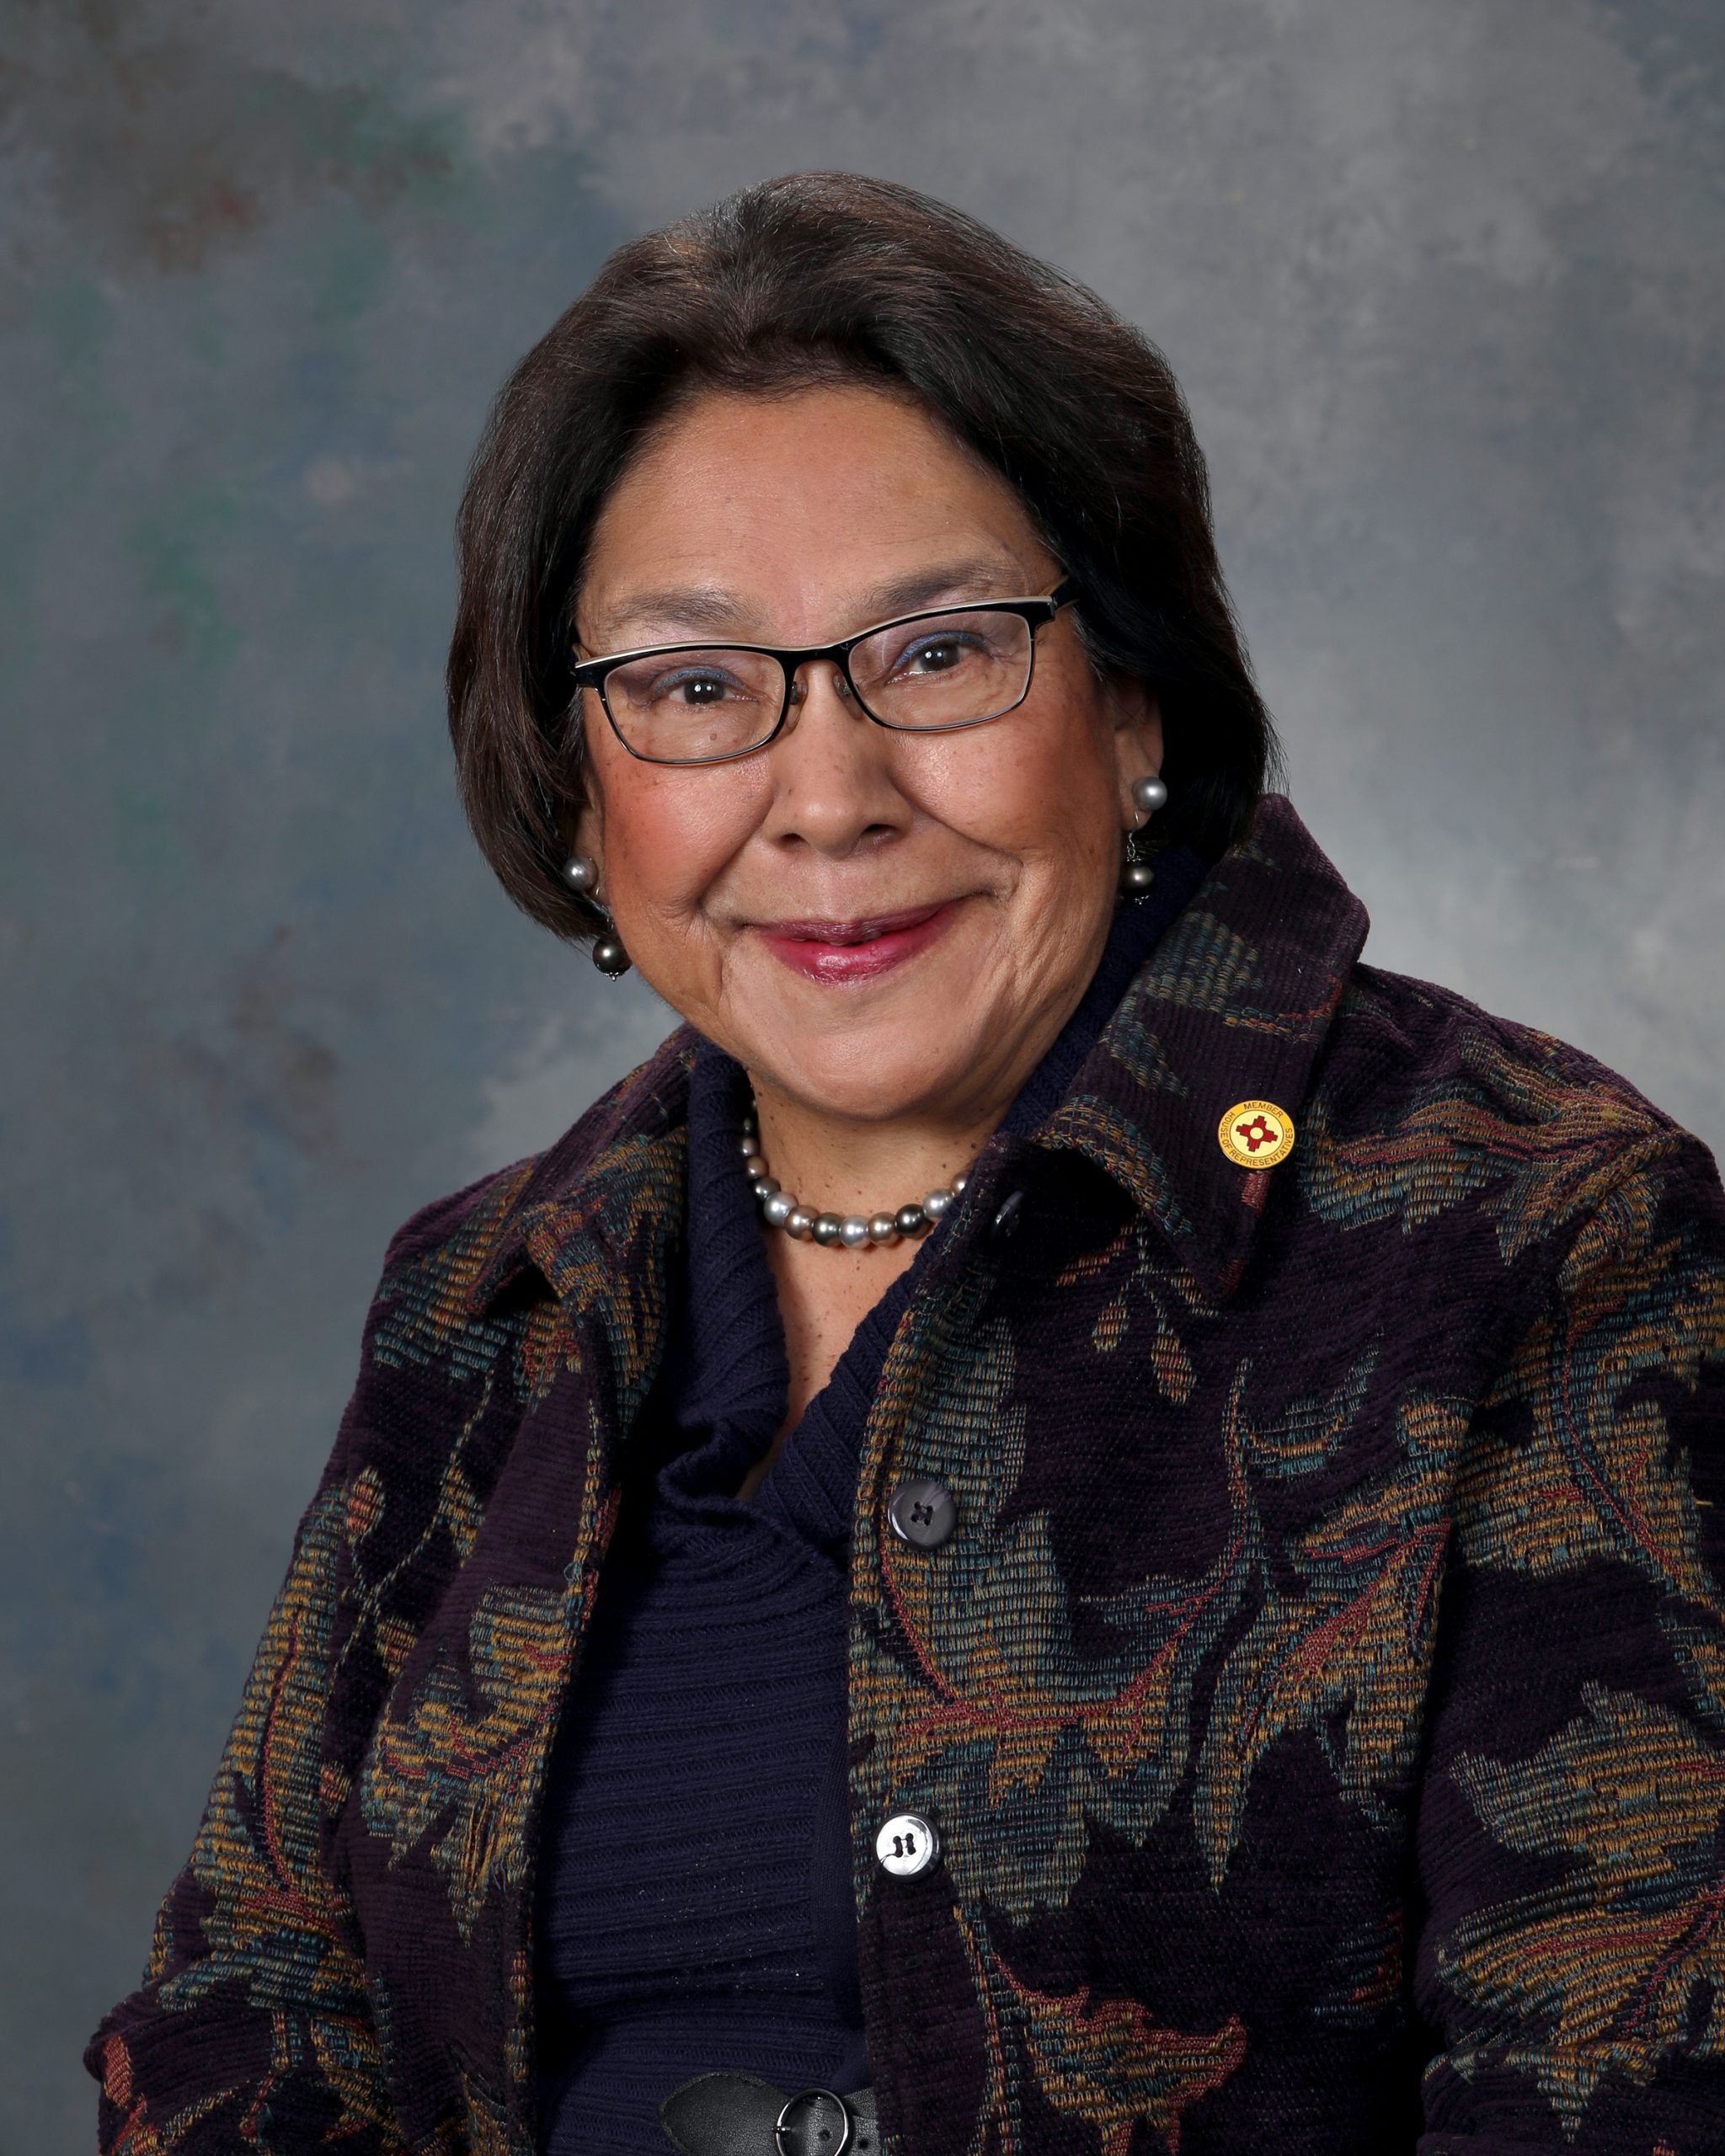 Patricia Roybal Caballero